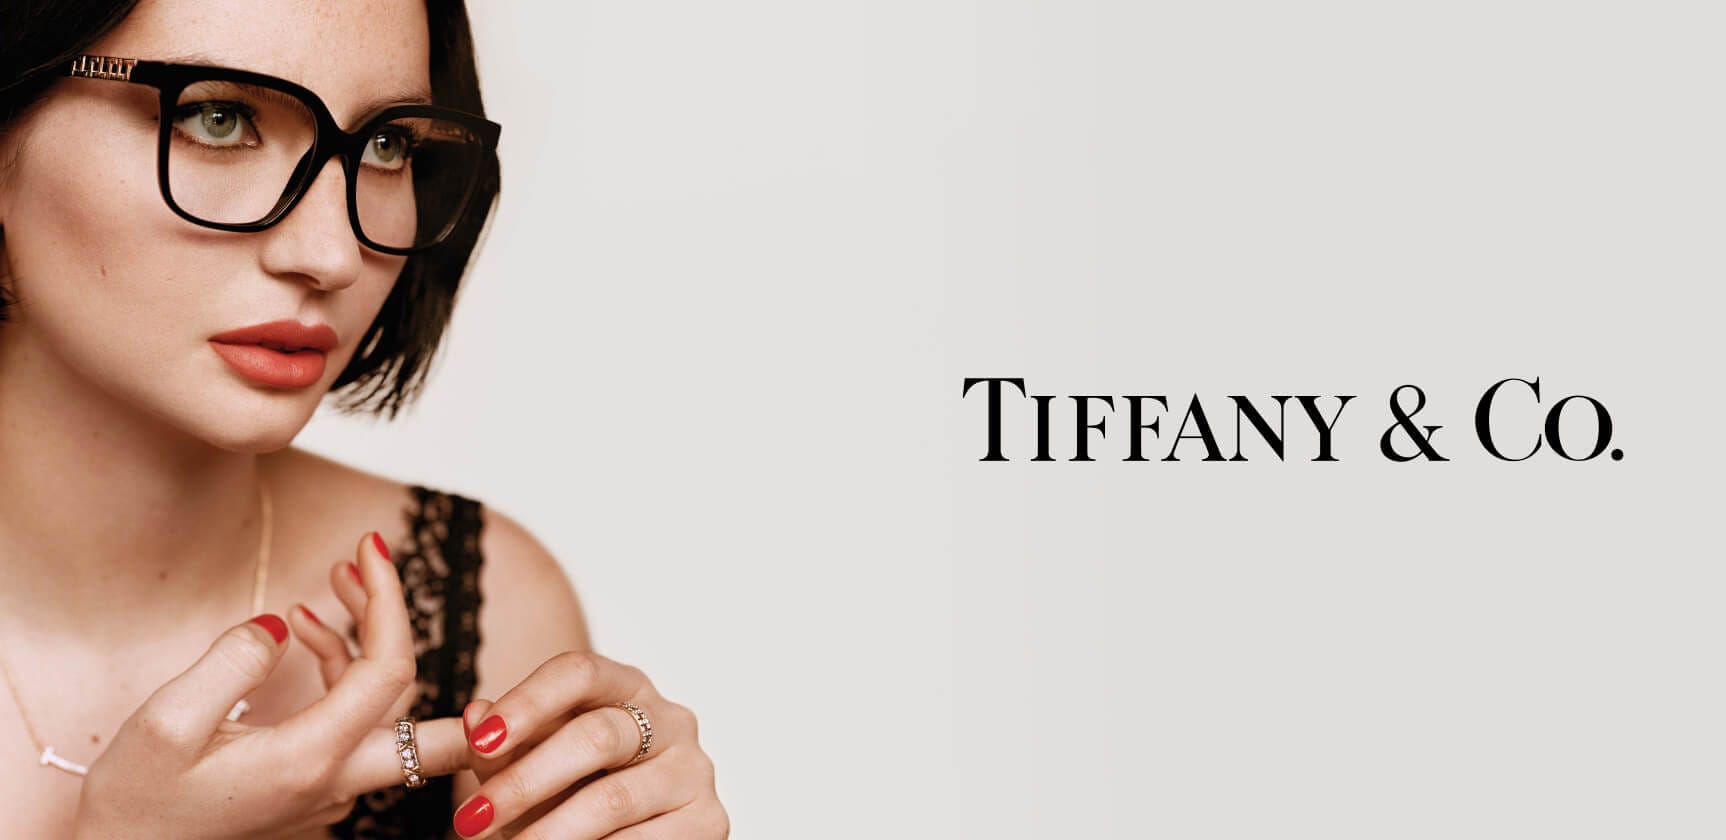 Tiffany banner image